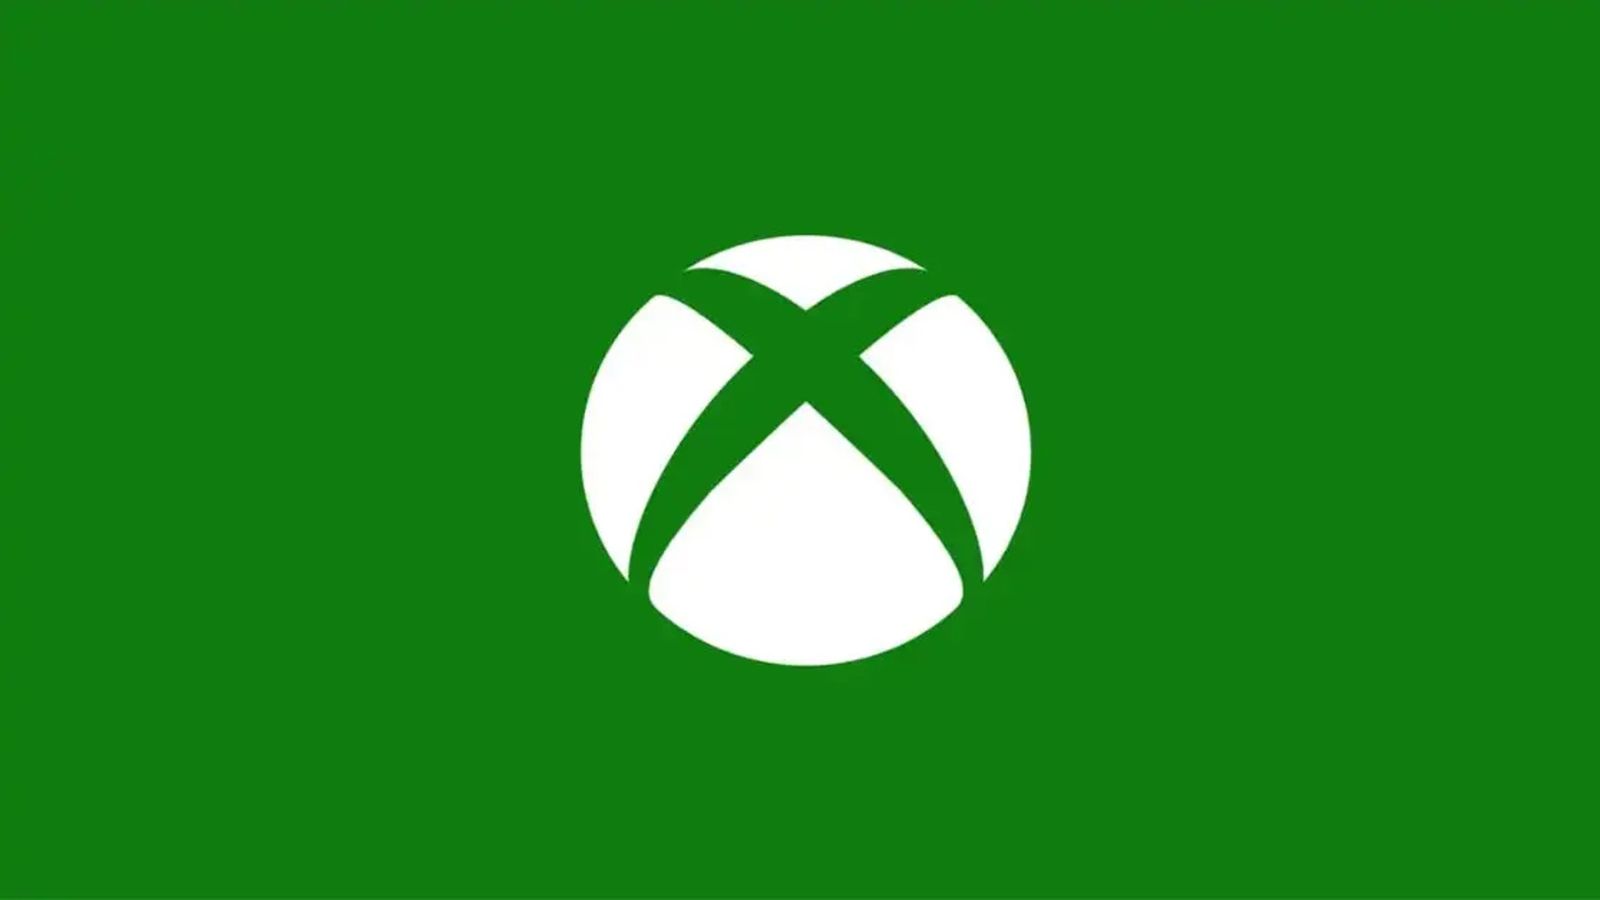 Xbox logo on green background